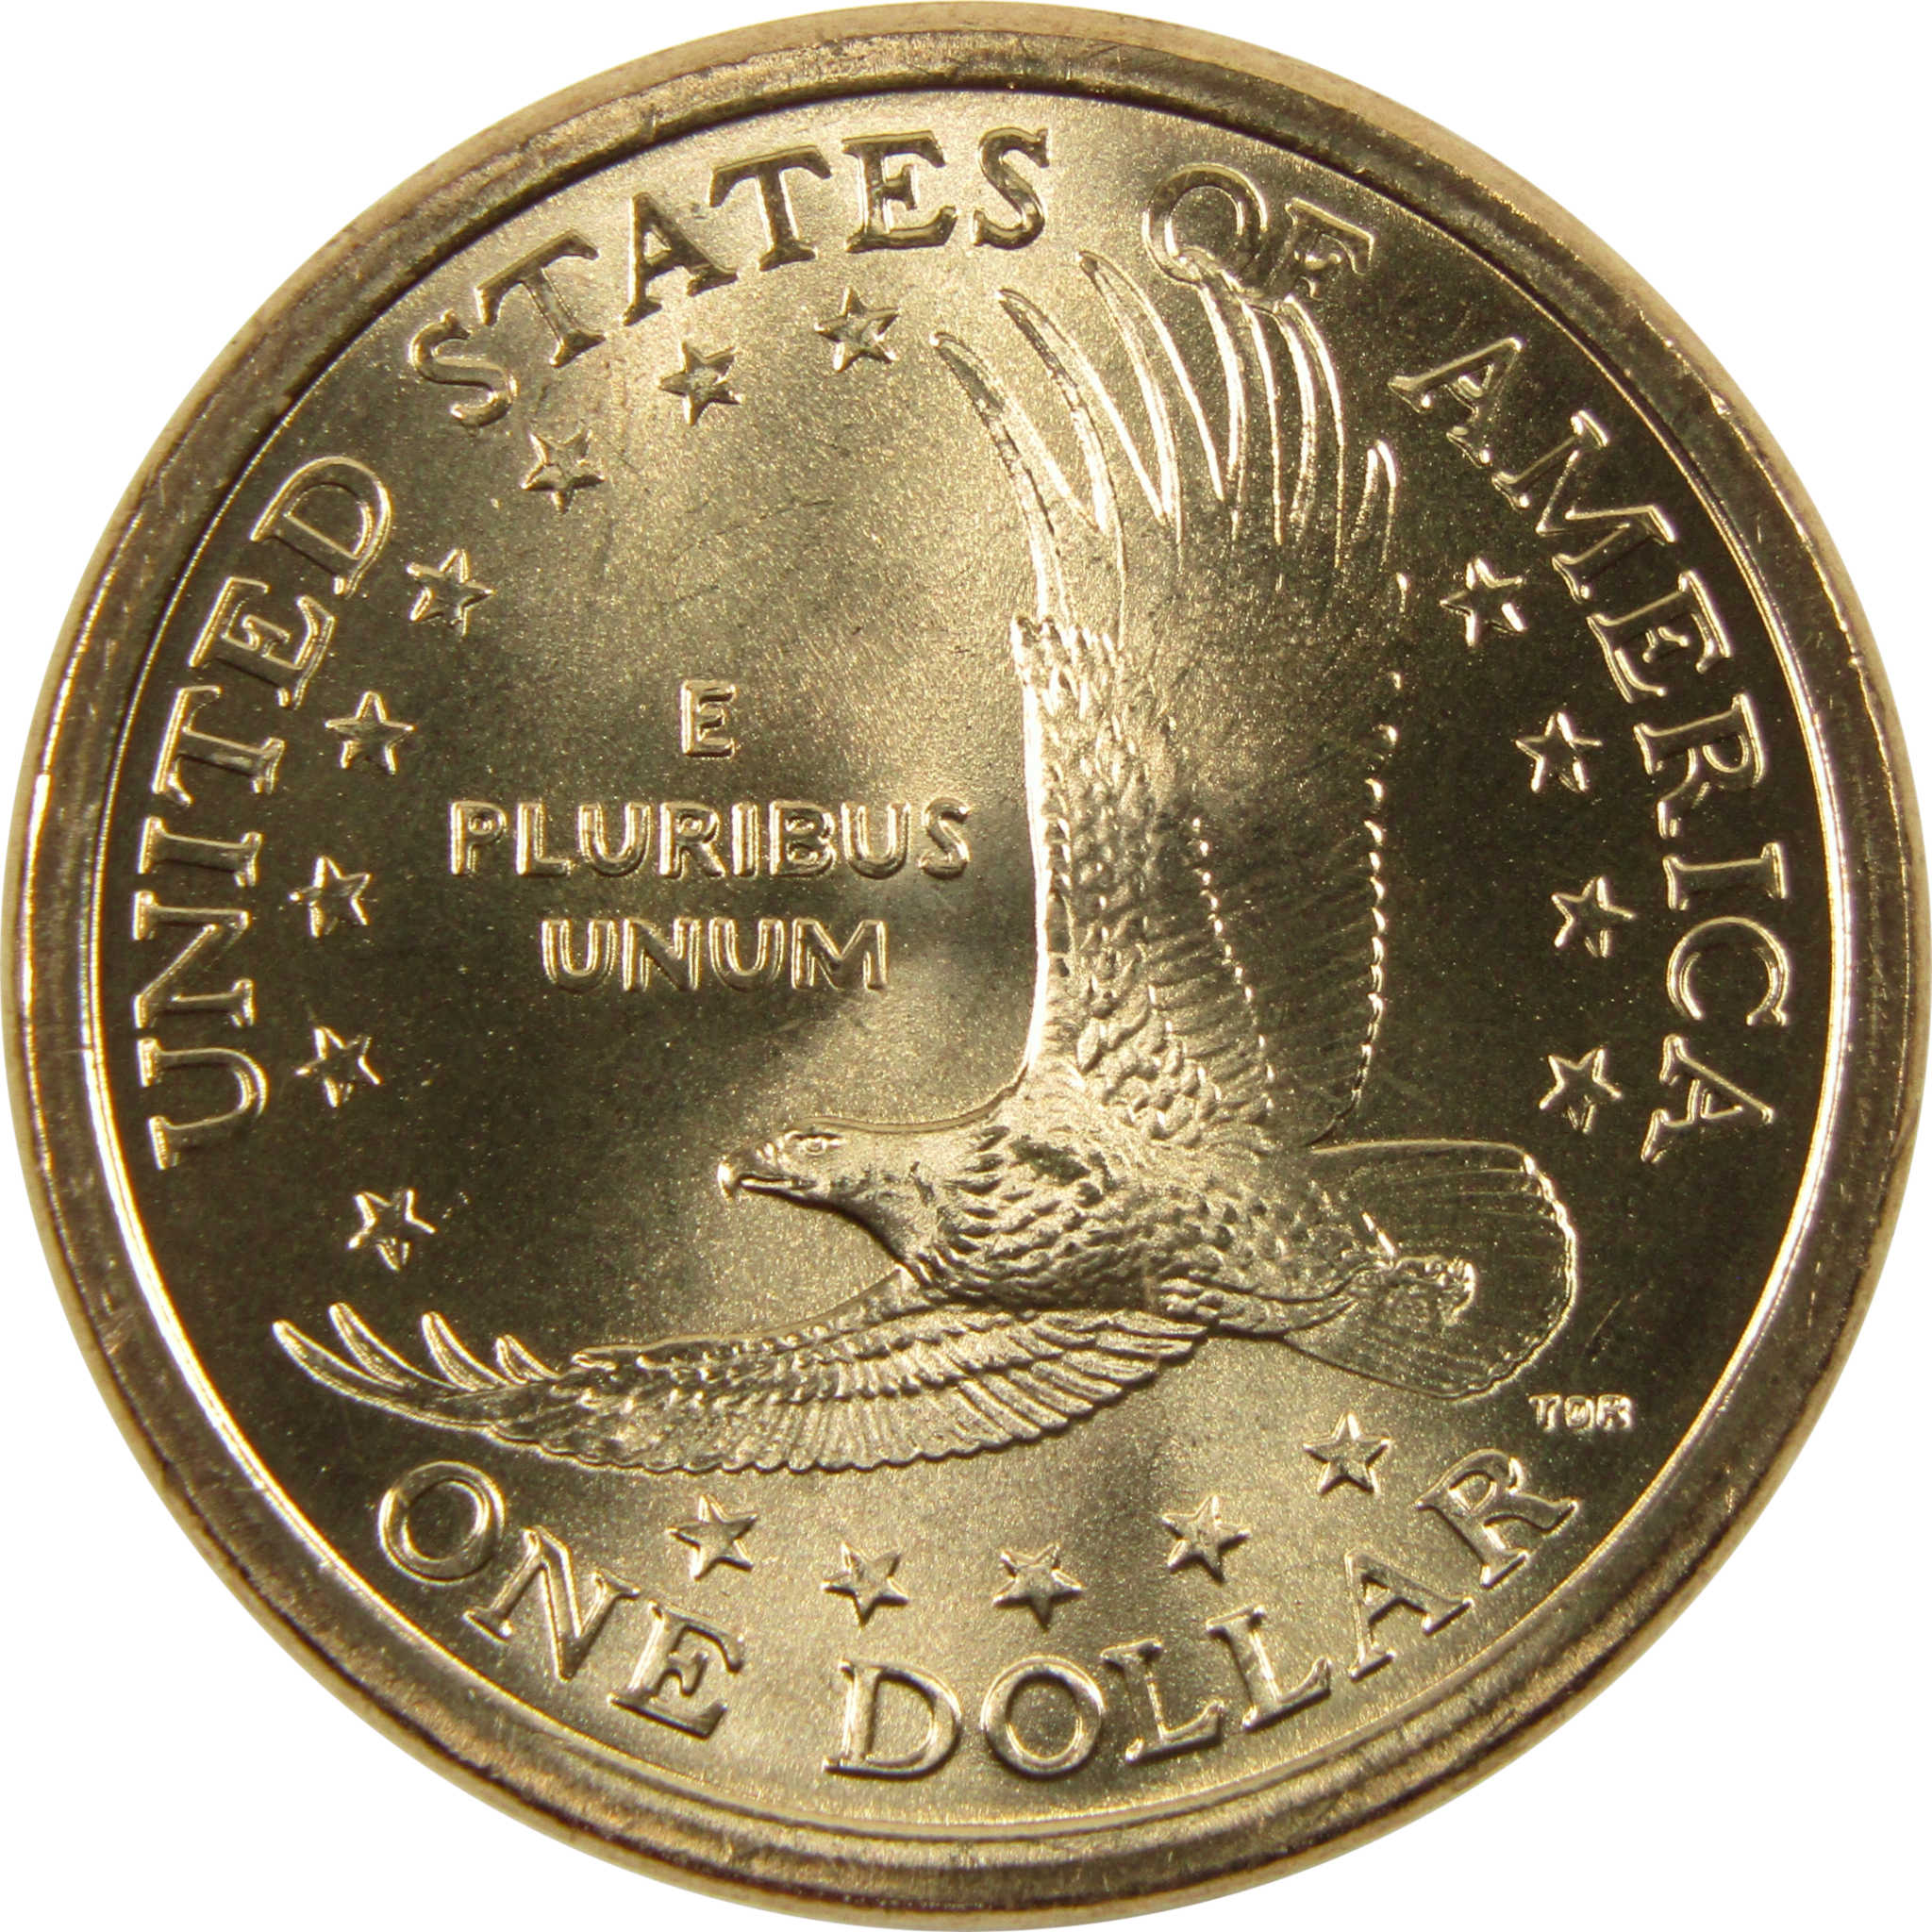 2006 P Sacagawea Native American Dollar BU Uncirculated $1 Coin